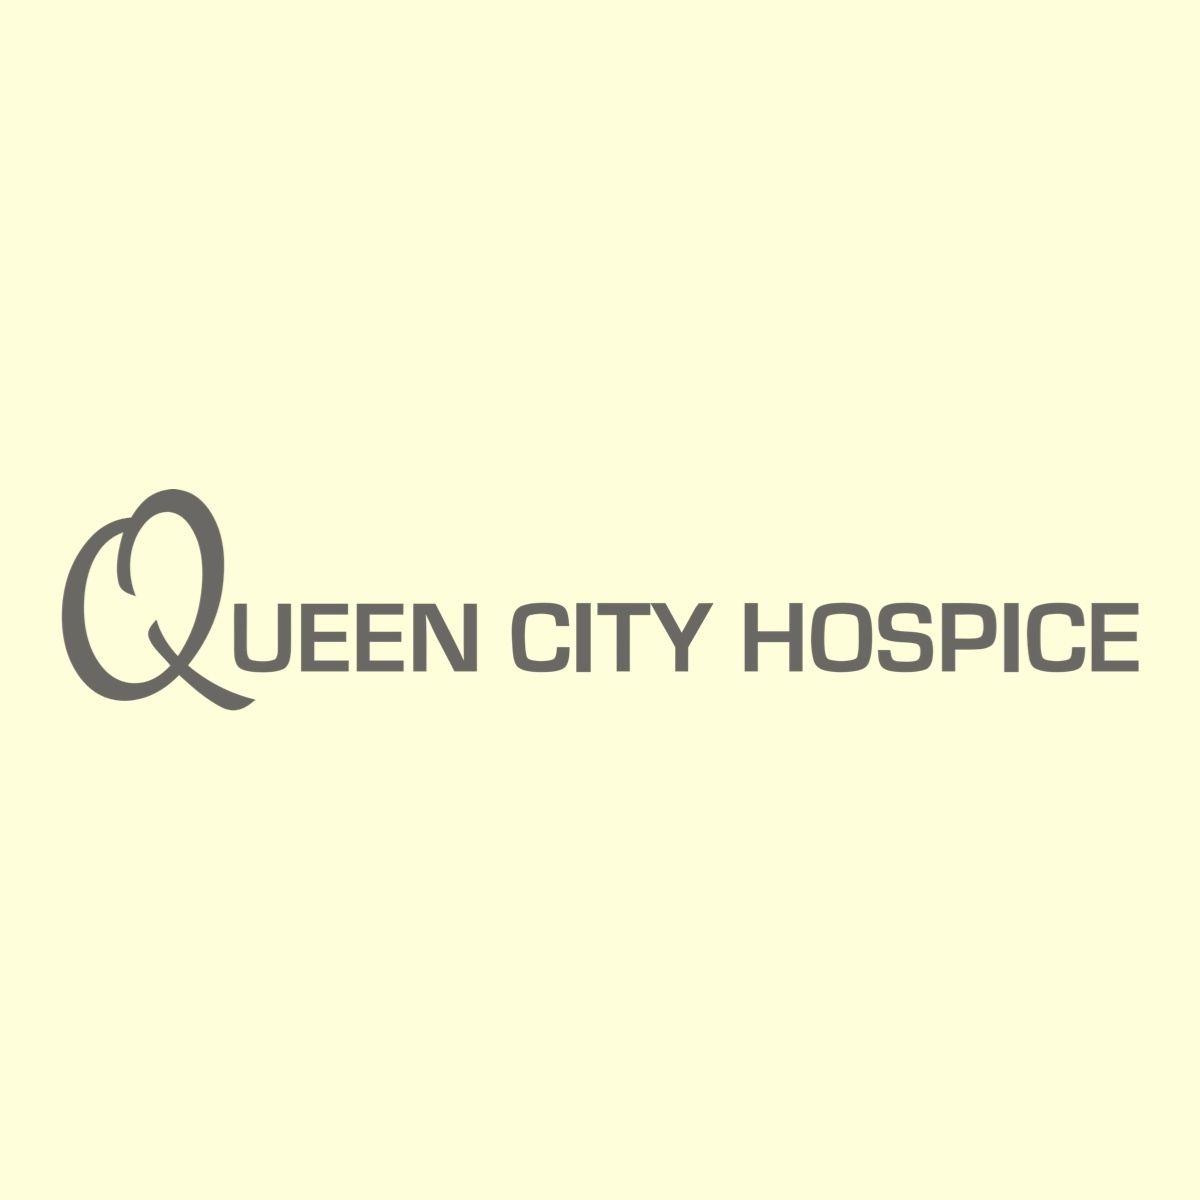 Hospice Logo - Hospice Care & Services in Cincinnati, Ohio. Queen City Hospice